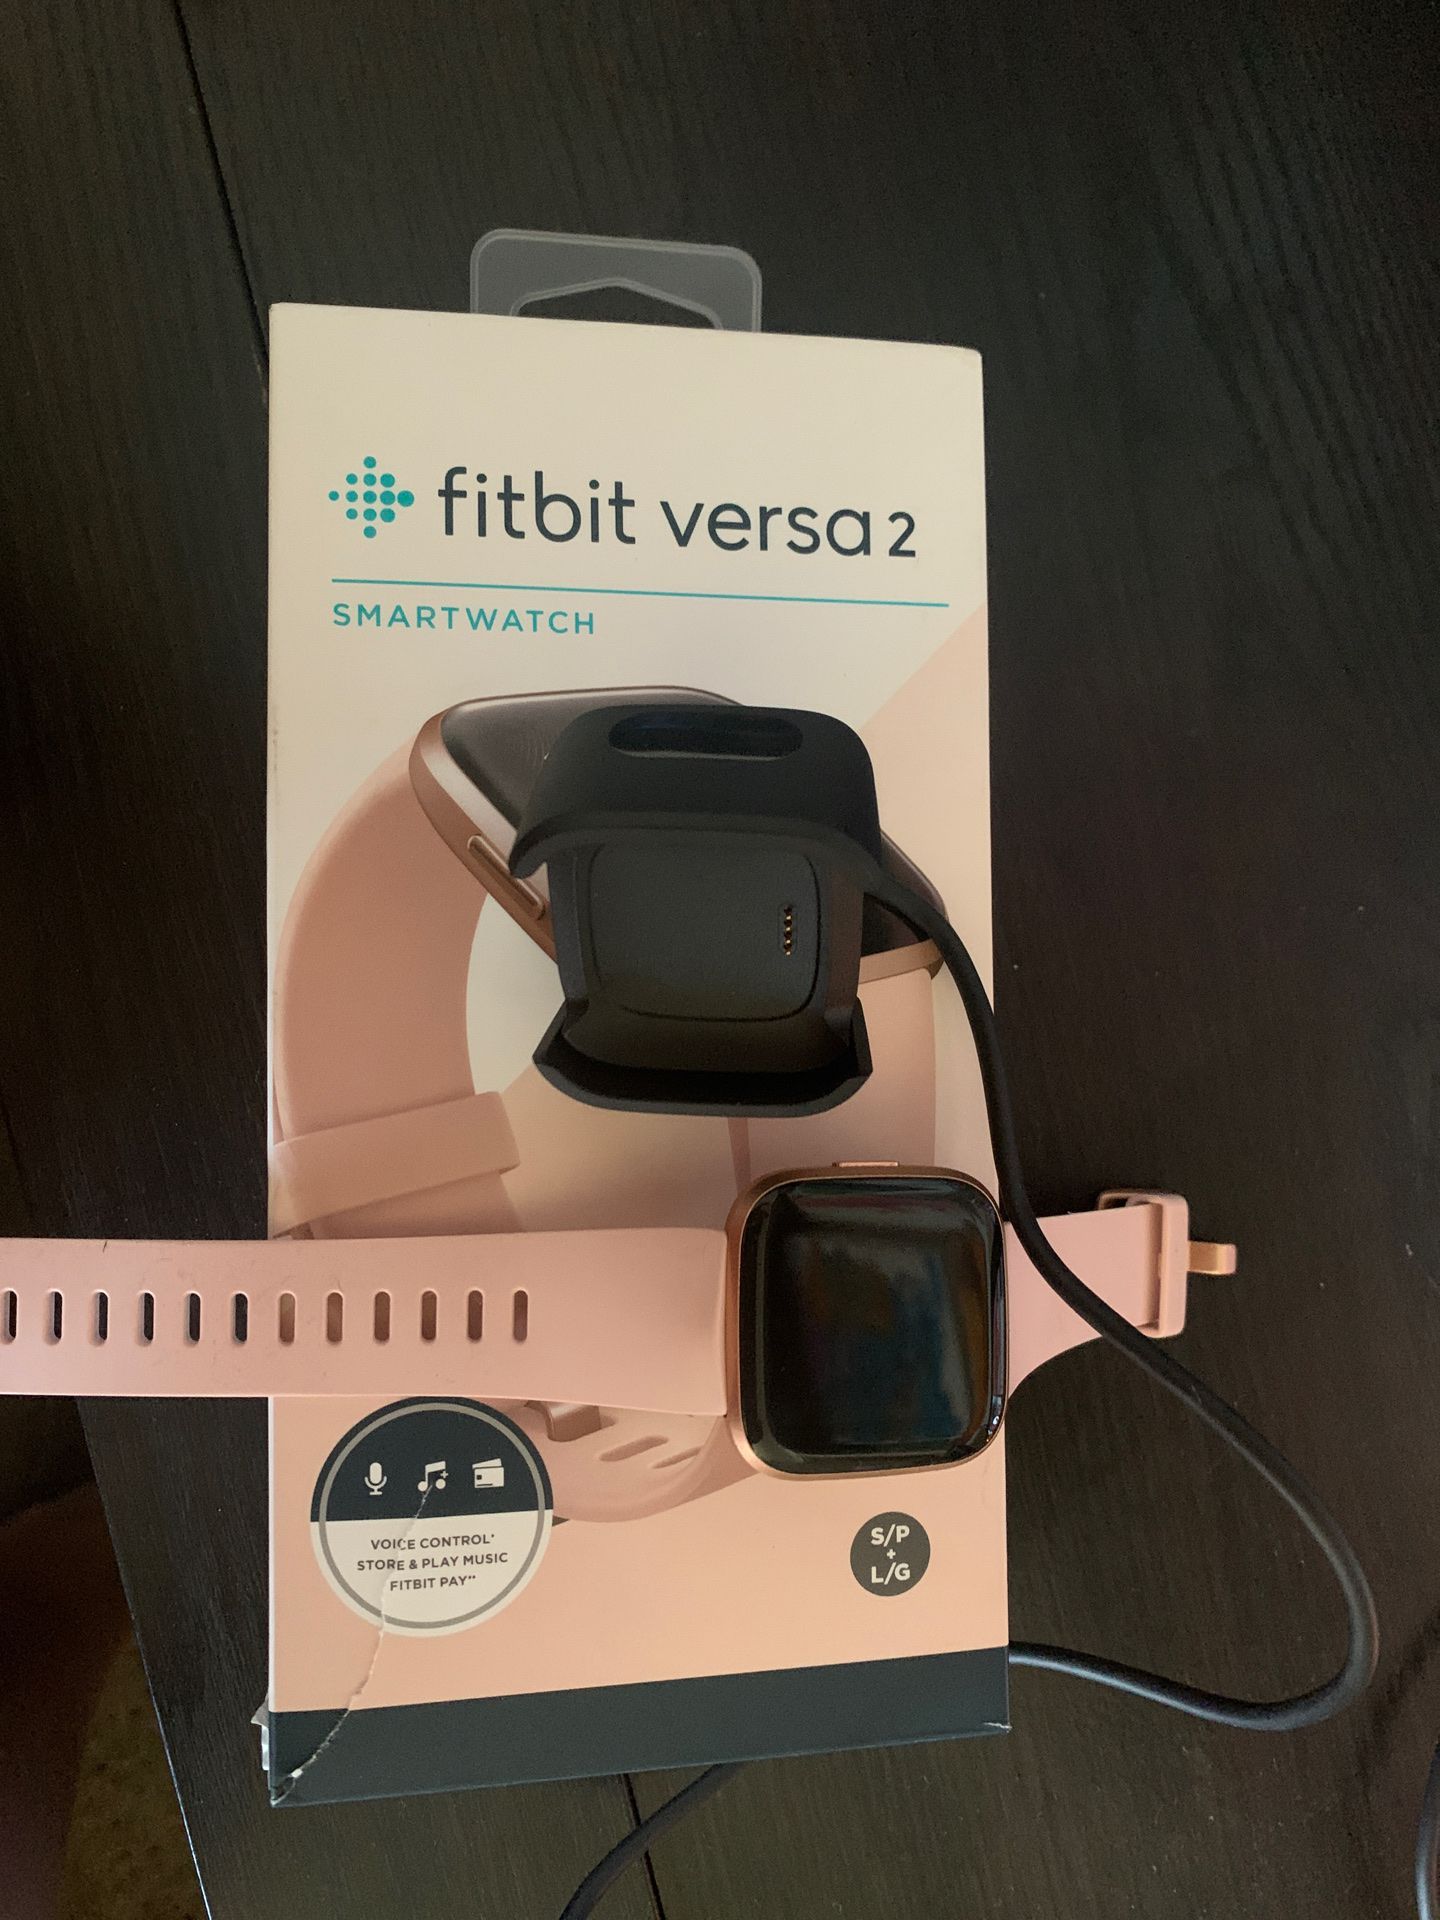 Fitbit versa 2 smart watch